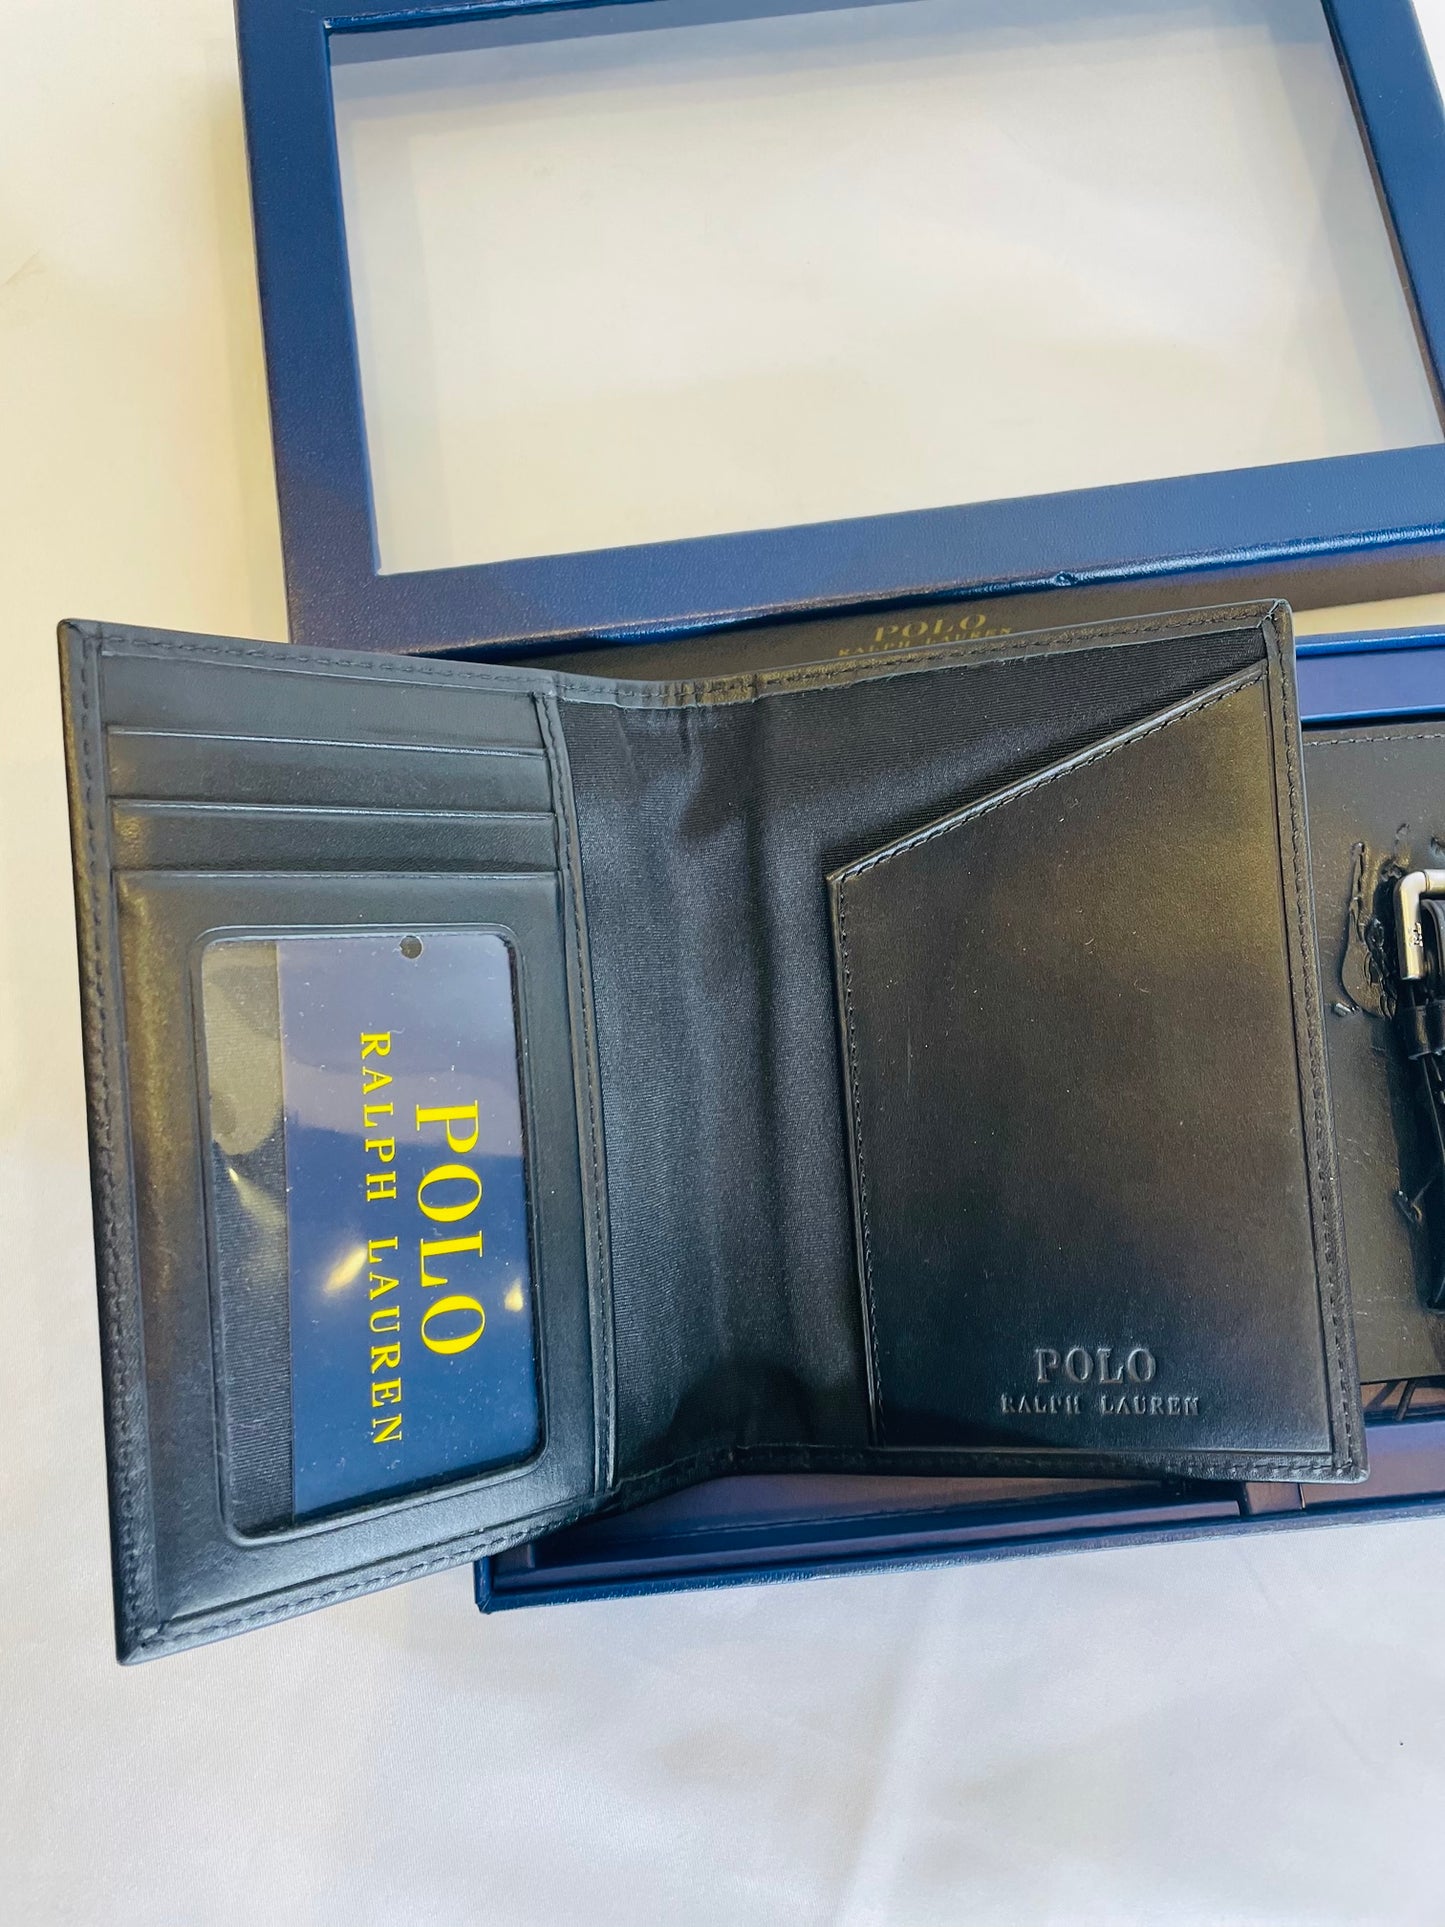 Ralph Lauren polo wallet set